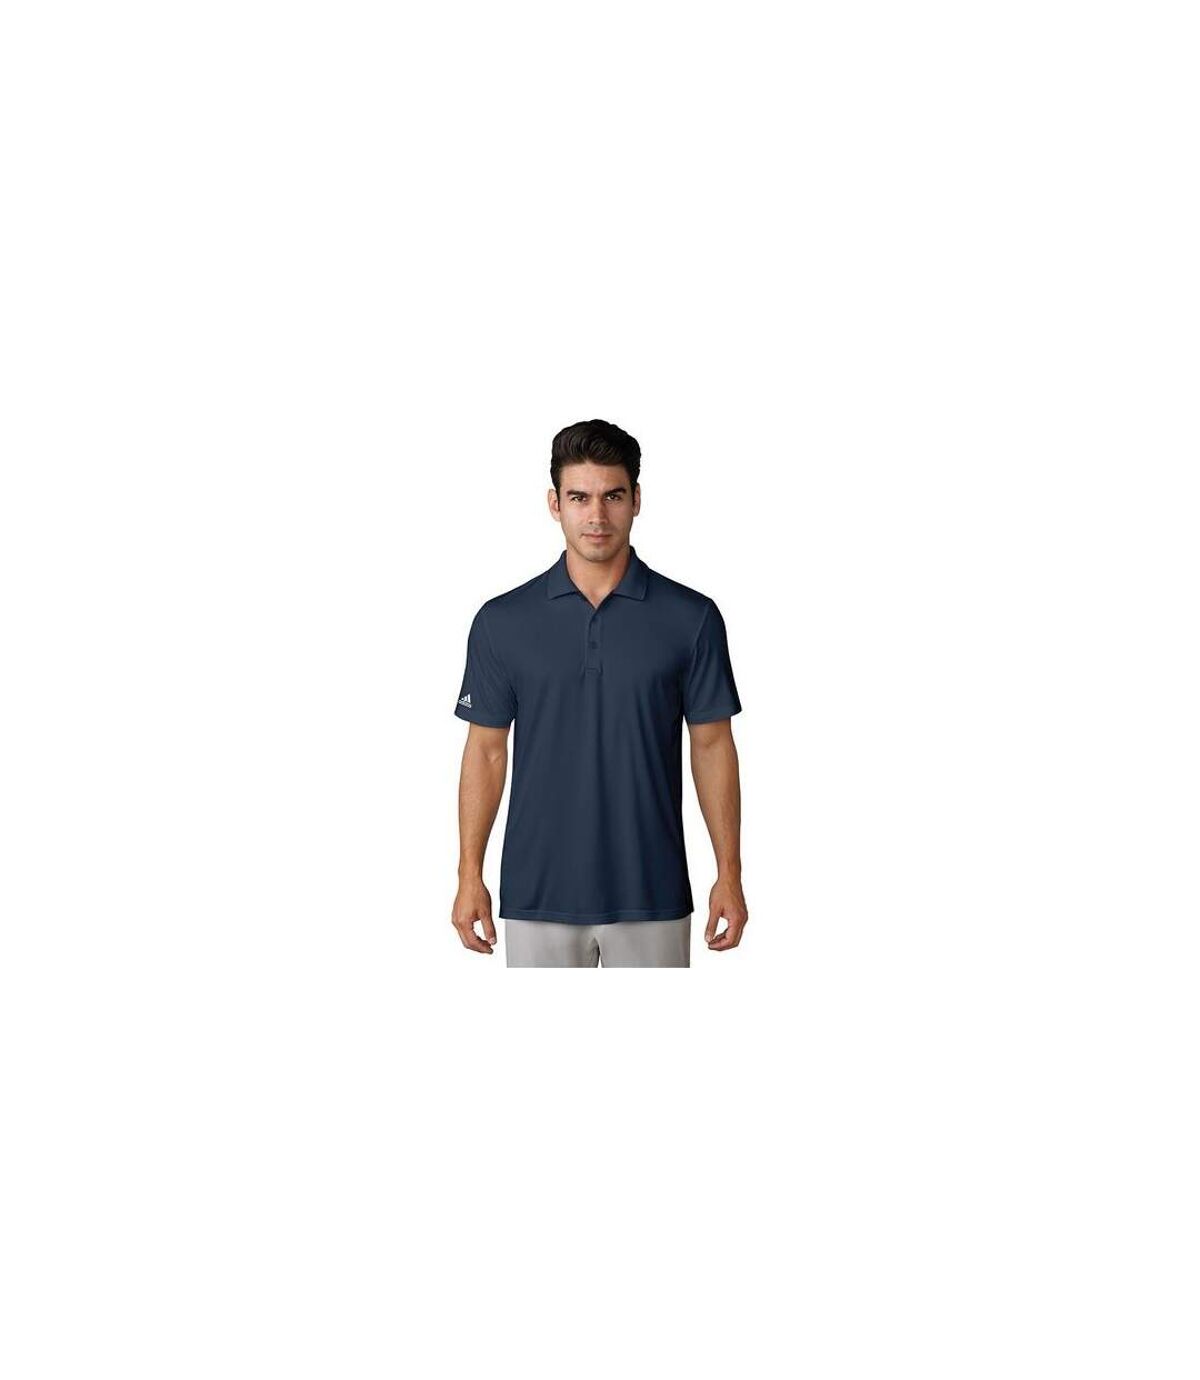 Adidas Mens Performance Polo Shirt (Collegiate Navy) - UTRW6133